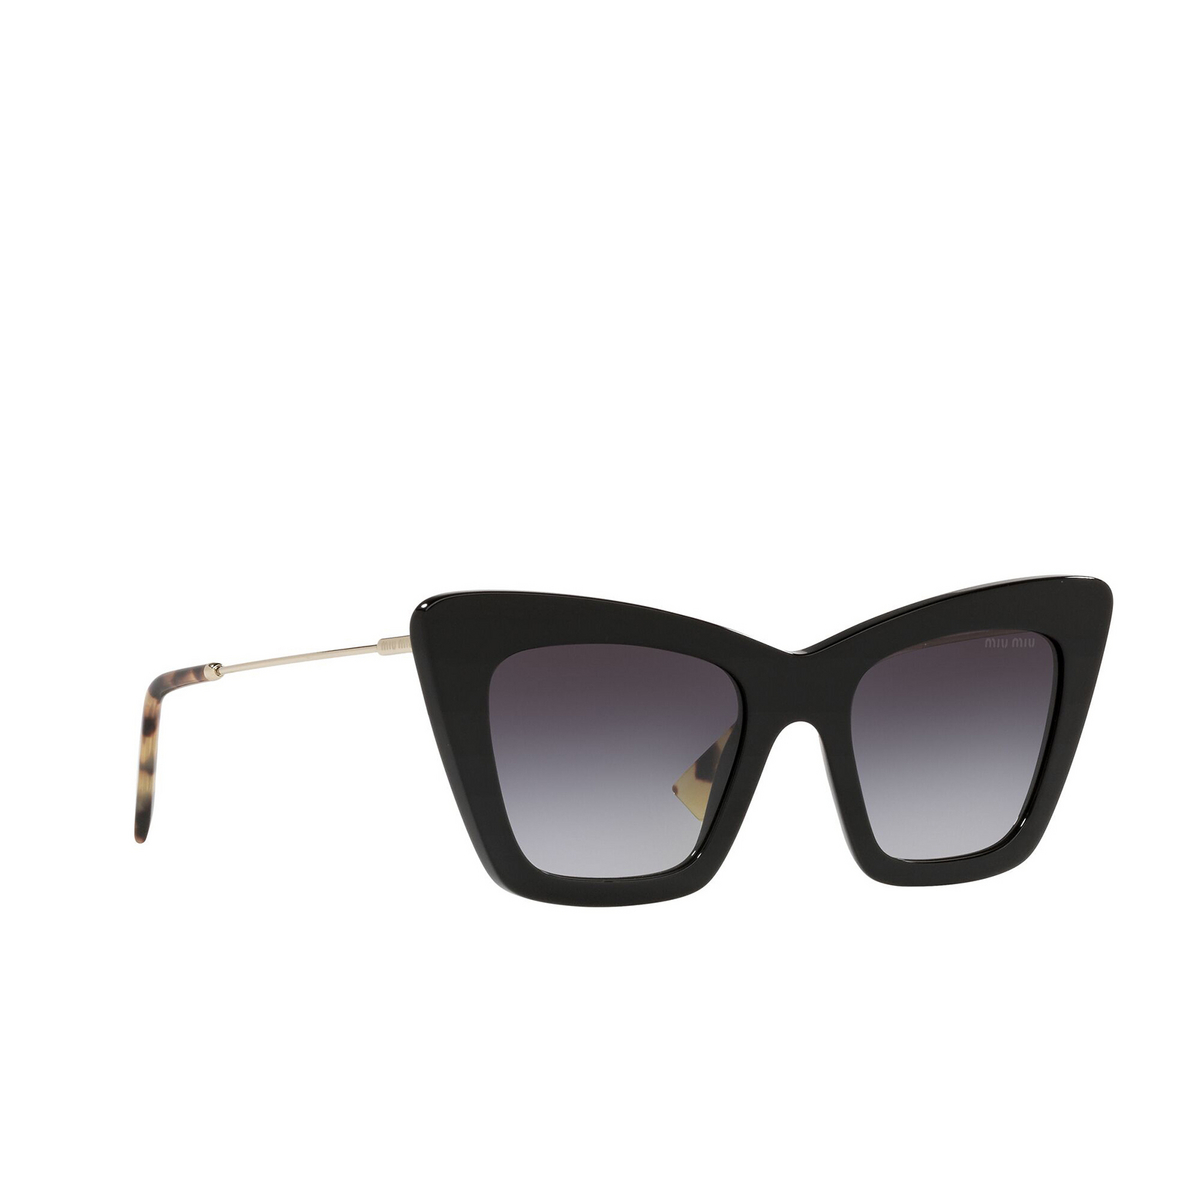 Miu Miu® Cat-eye Sunglasses: MU 01WS color Black 1AB5D1 - three-quarters view.